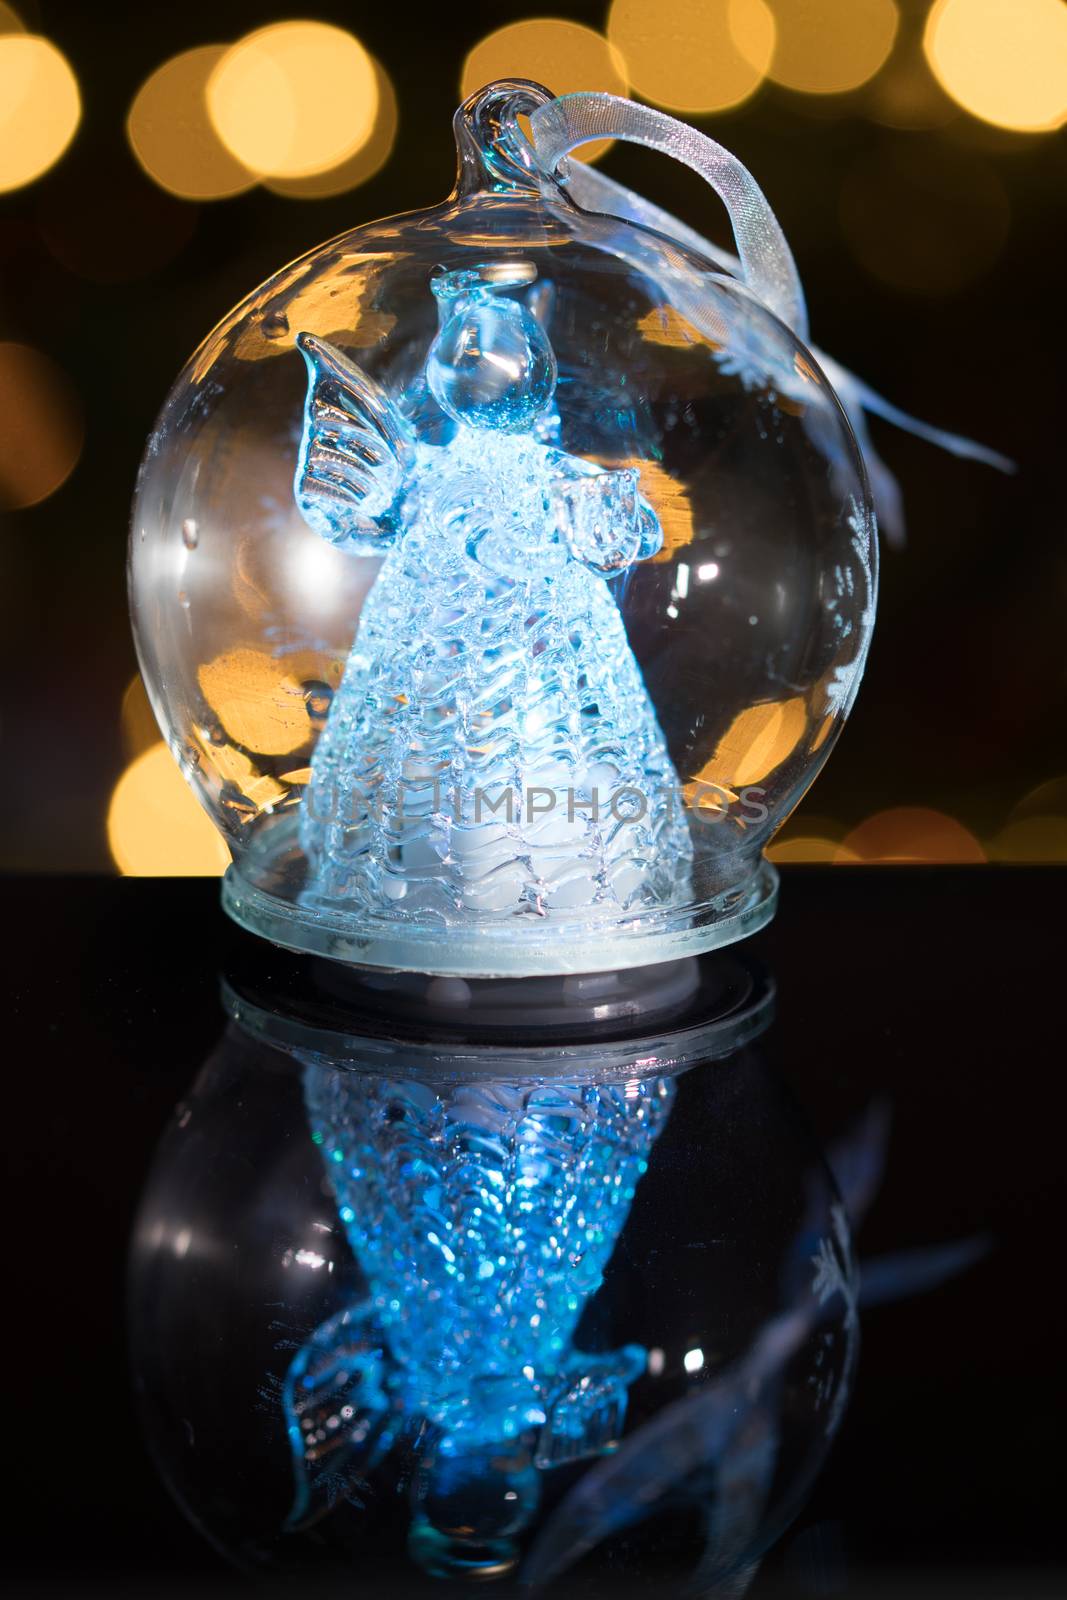 Illuminated angel figure in glass bulb, soft boke christmas lights as background, Christmas decoration